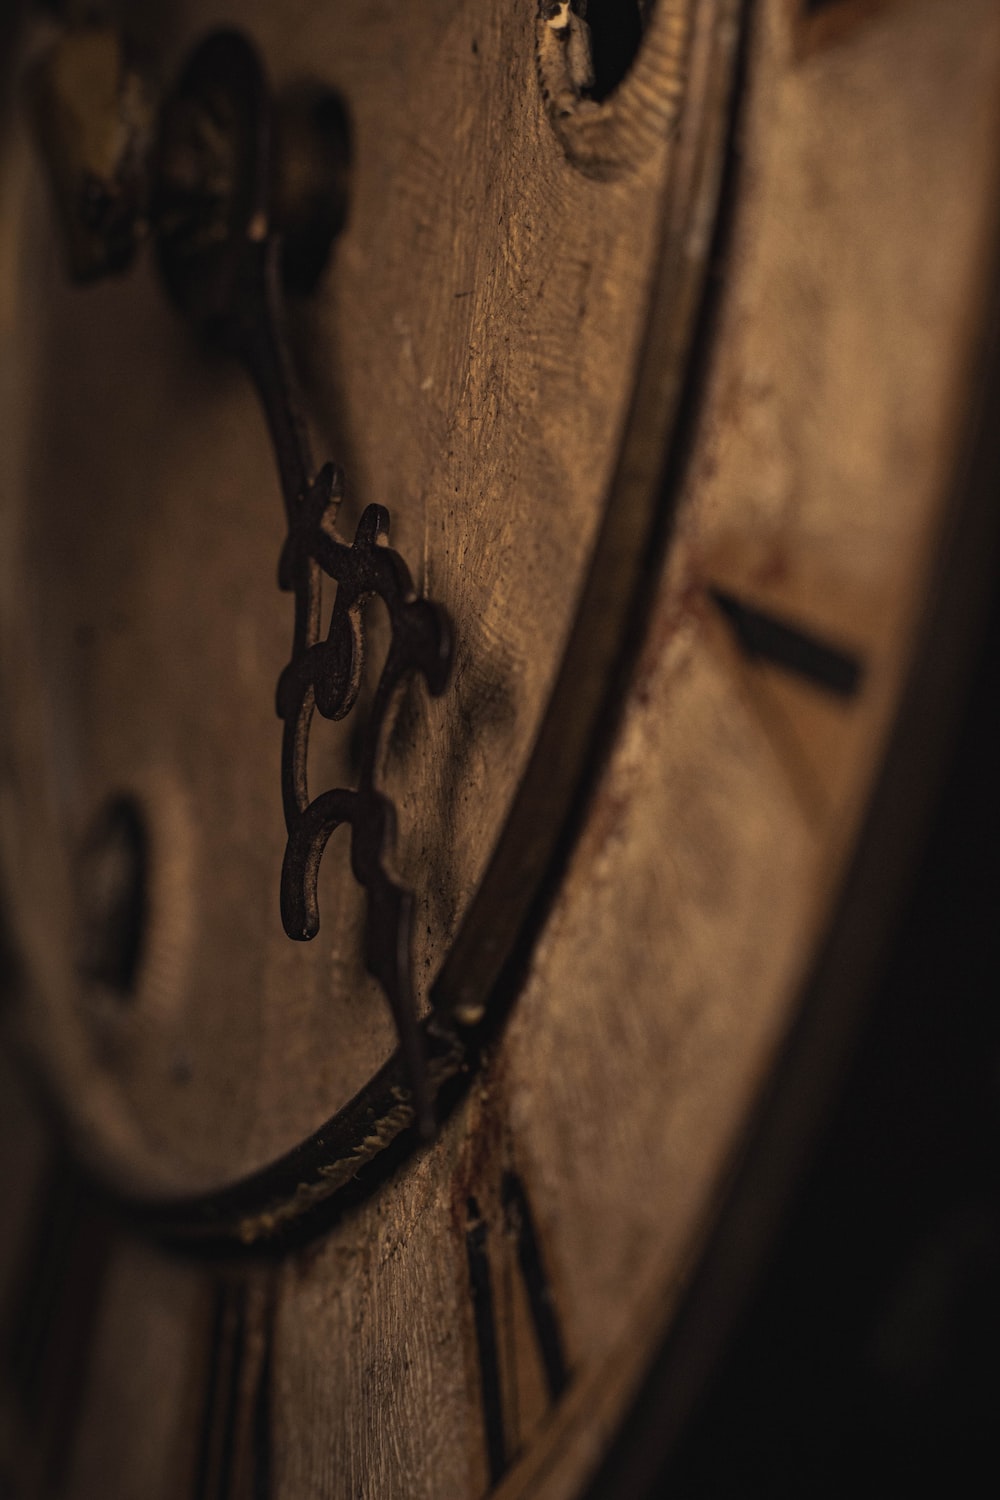 a close up of an old clock face